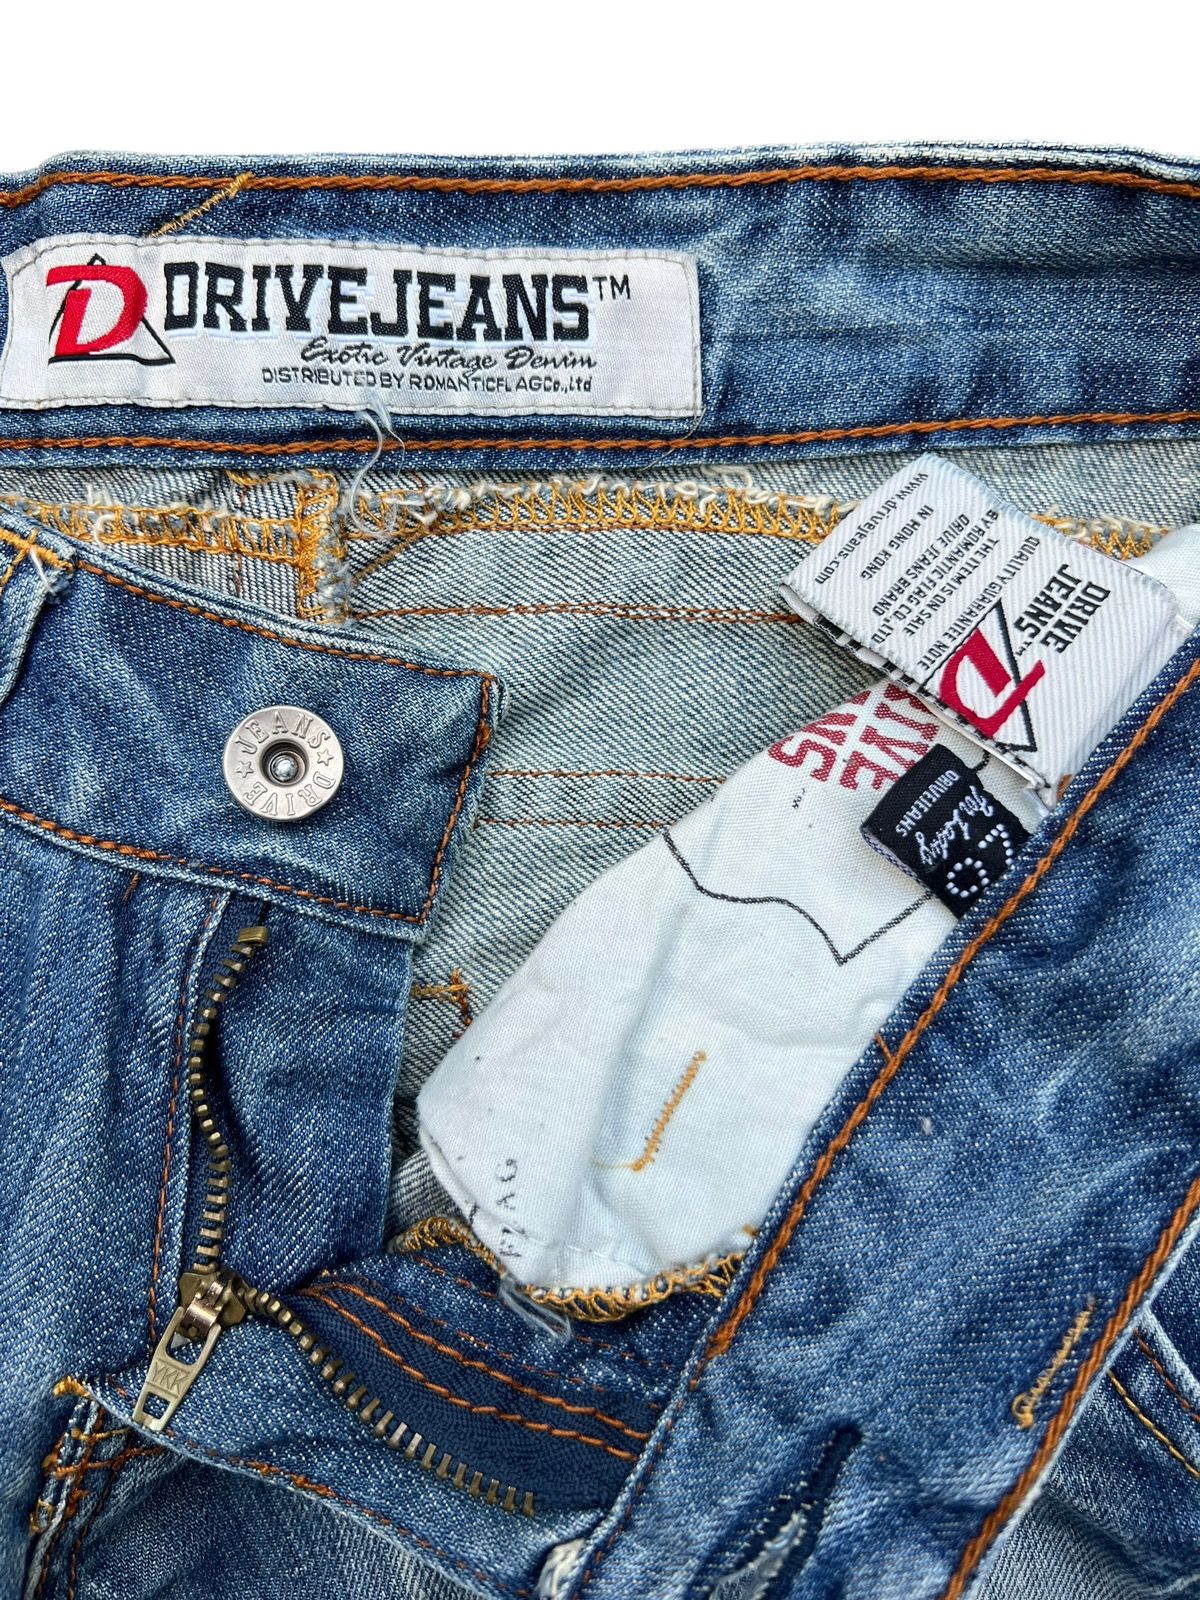 Hype - Drive Mud Wash Distressed Lowrise Denim Flare Jeans 28x32 - 9